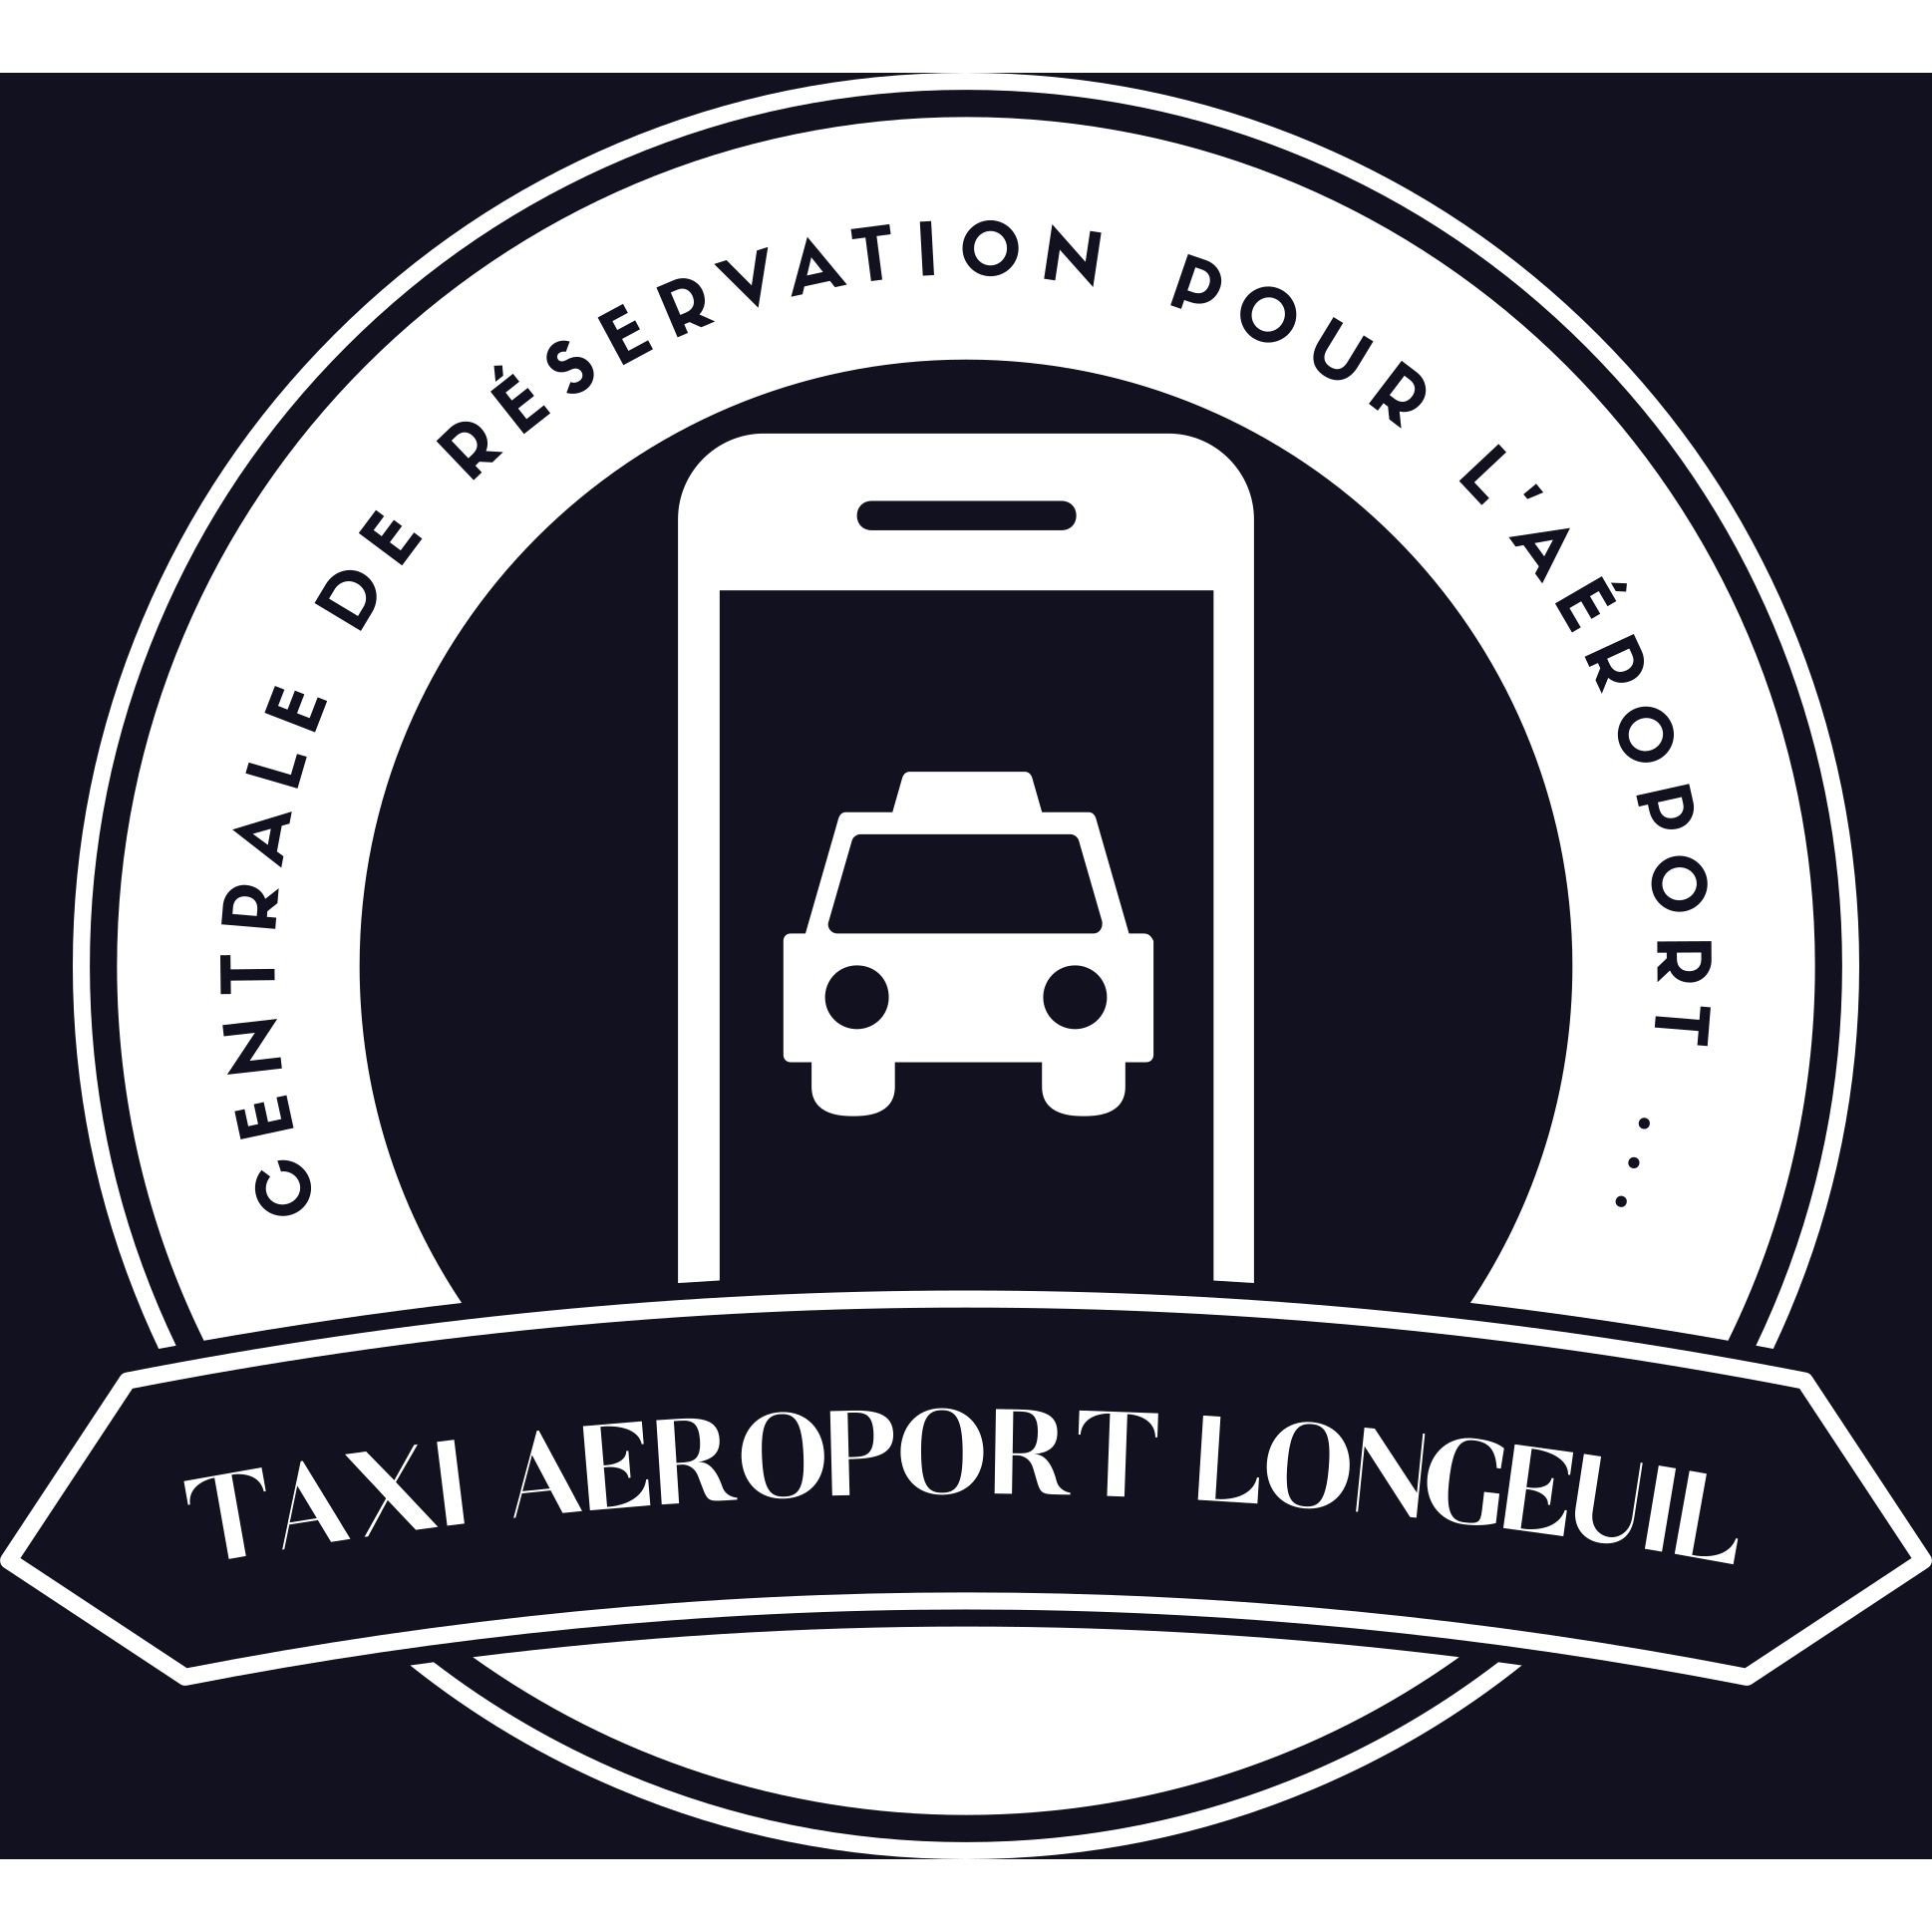 Taxi Aéroport Longueuil - Taxis